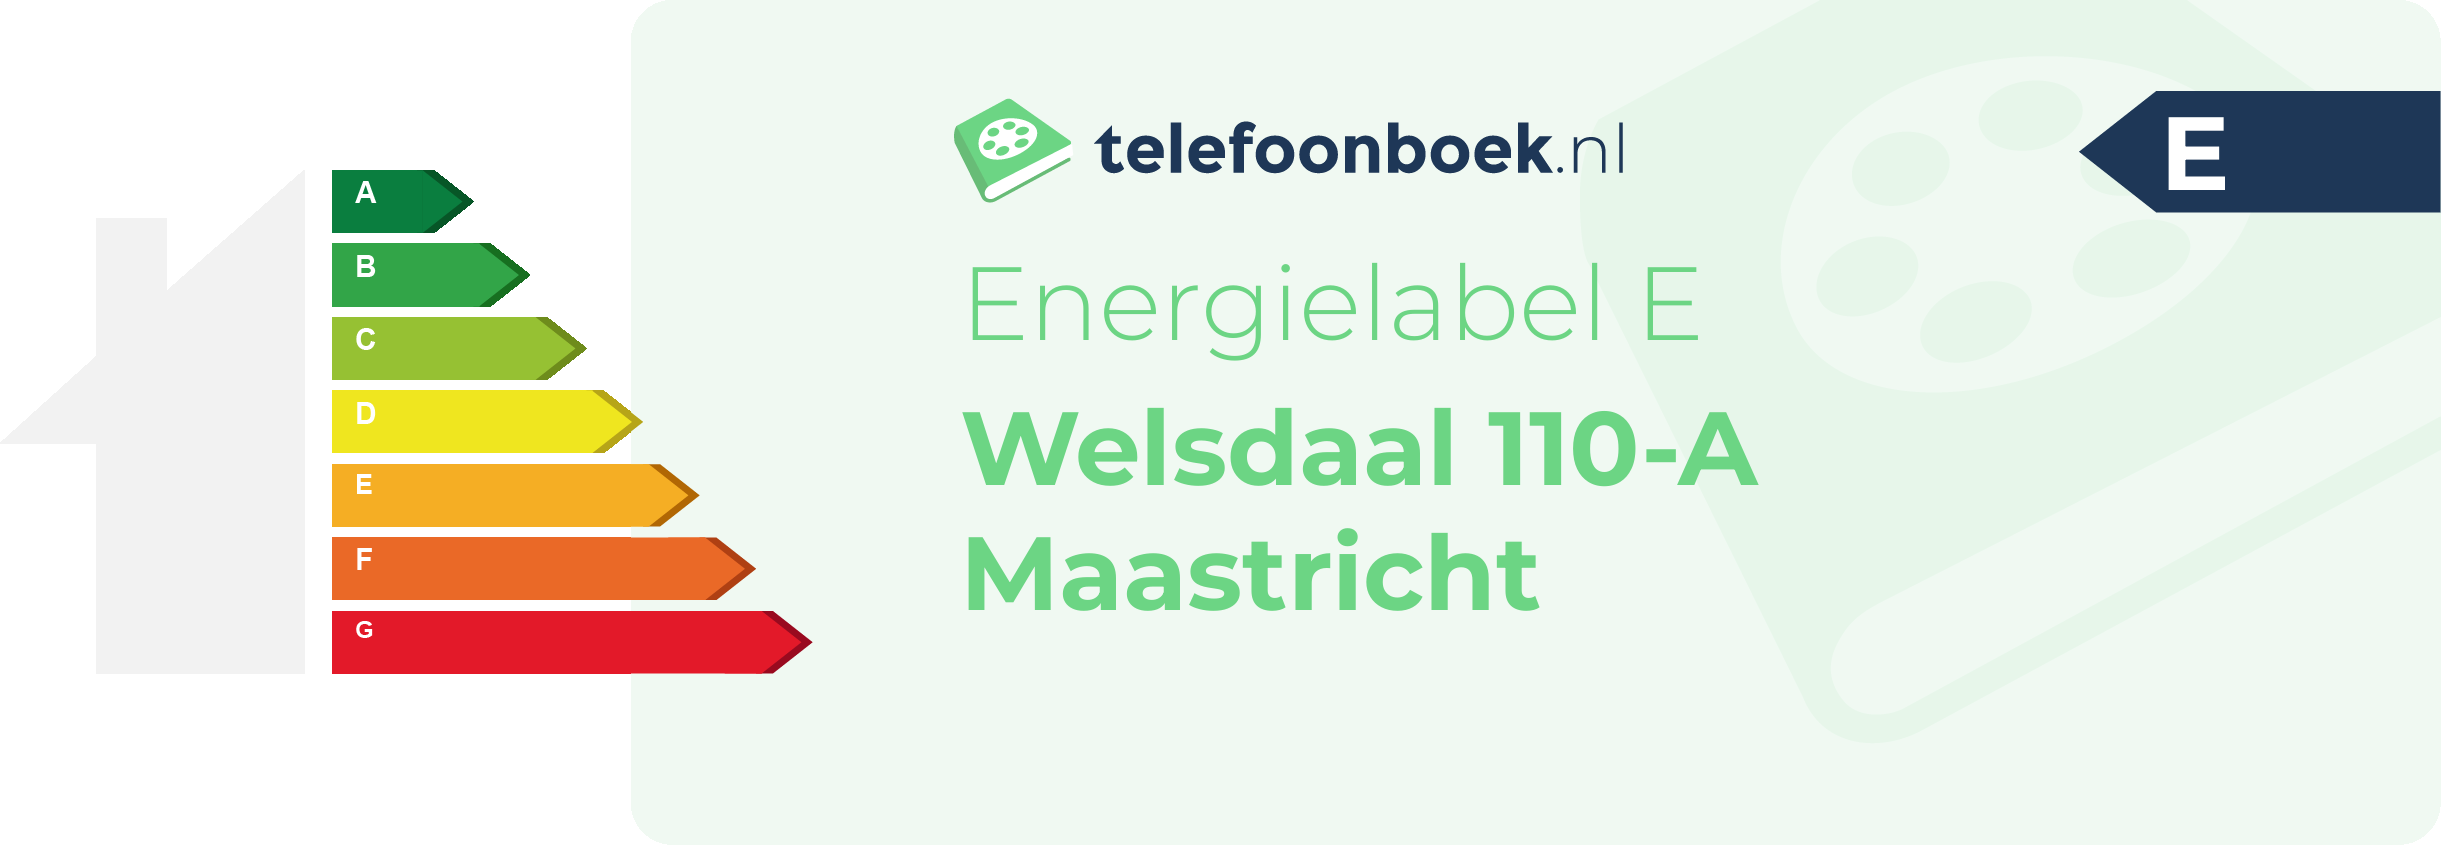 Energielabel Welsdaal 110-A Maastricht